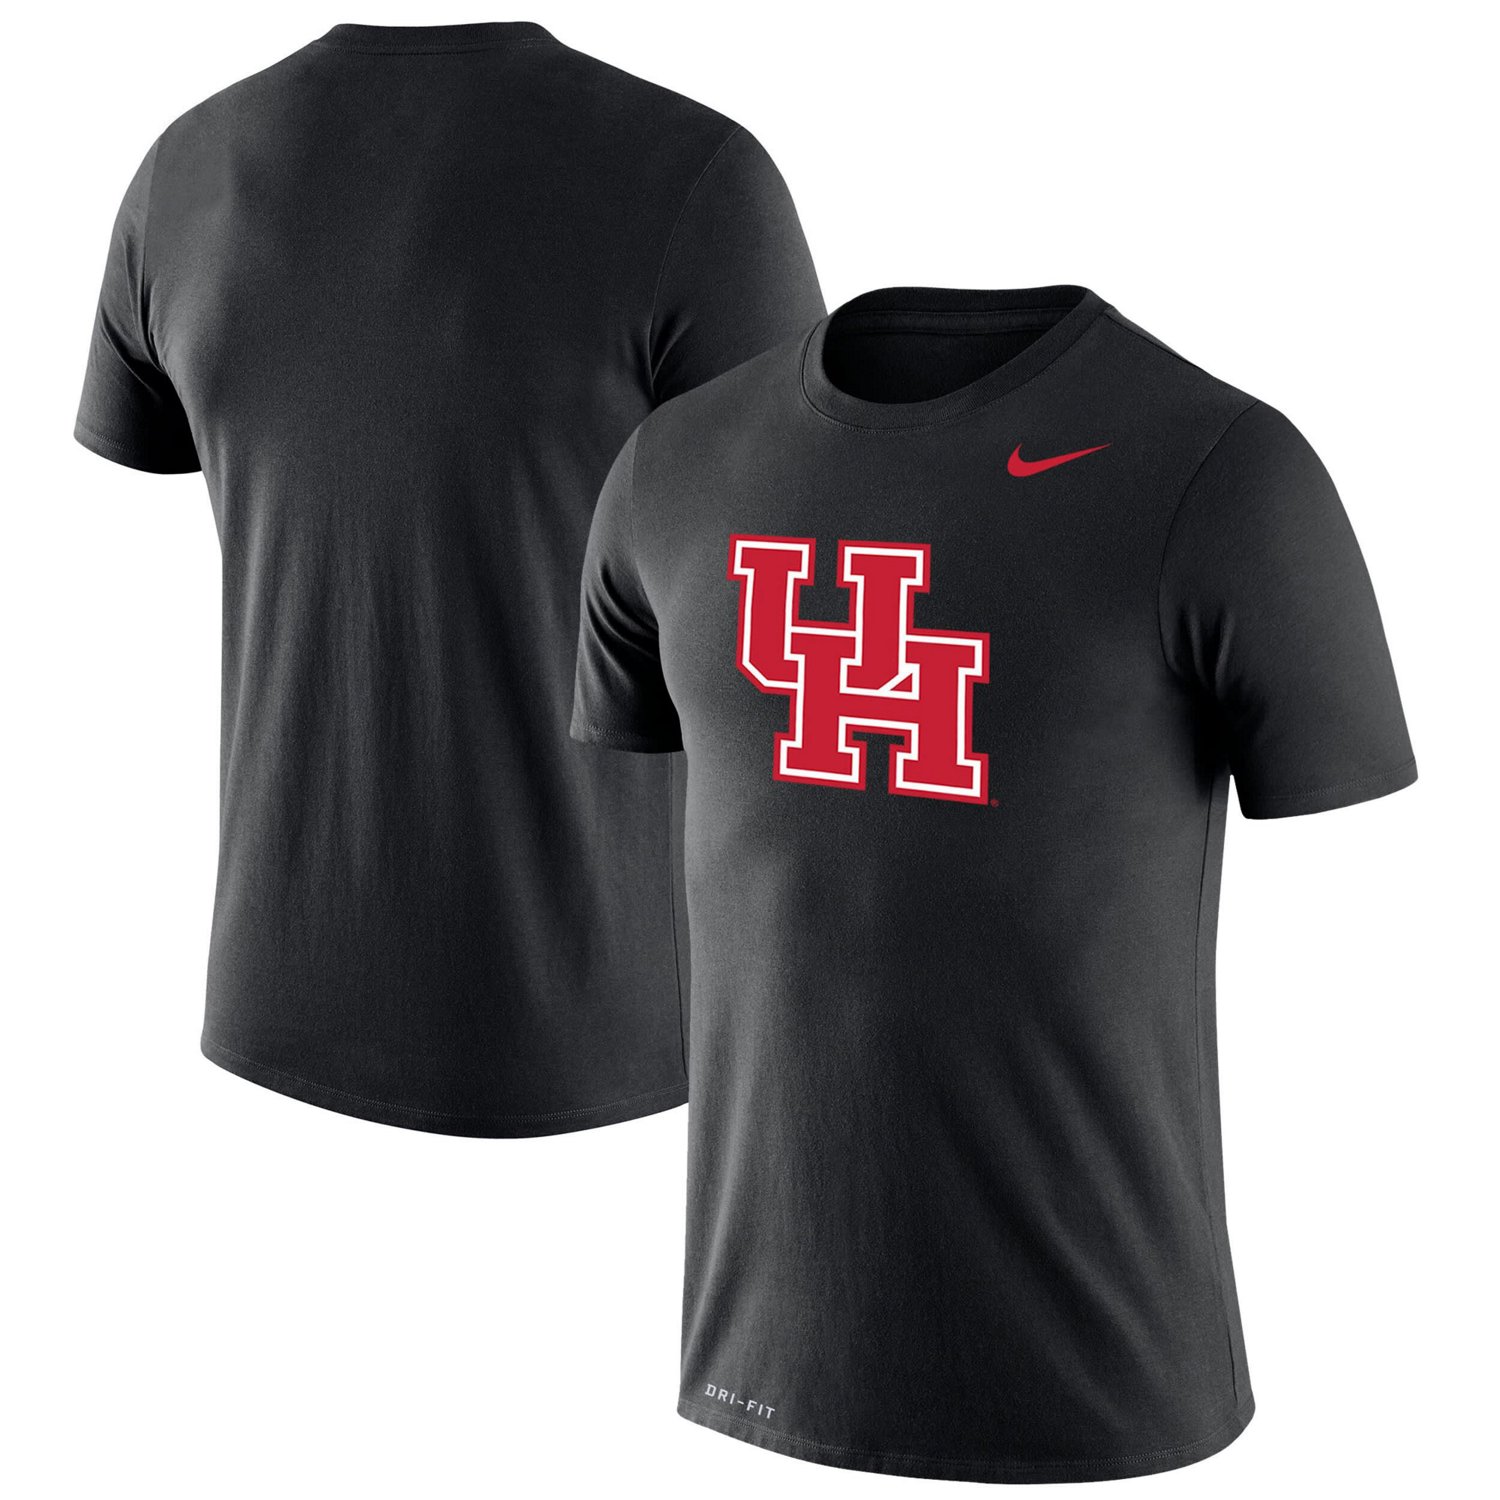 University of Houston Shirts, Apparel, & Gear